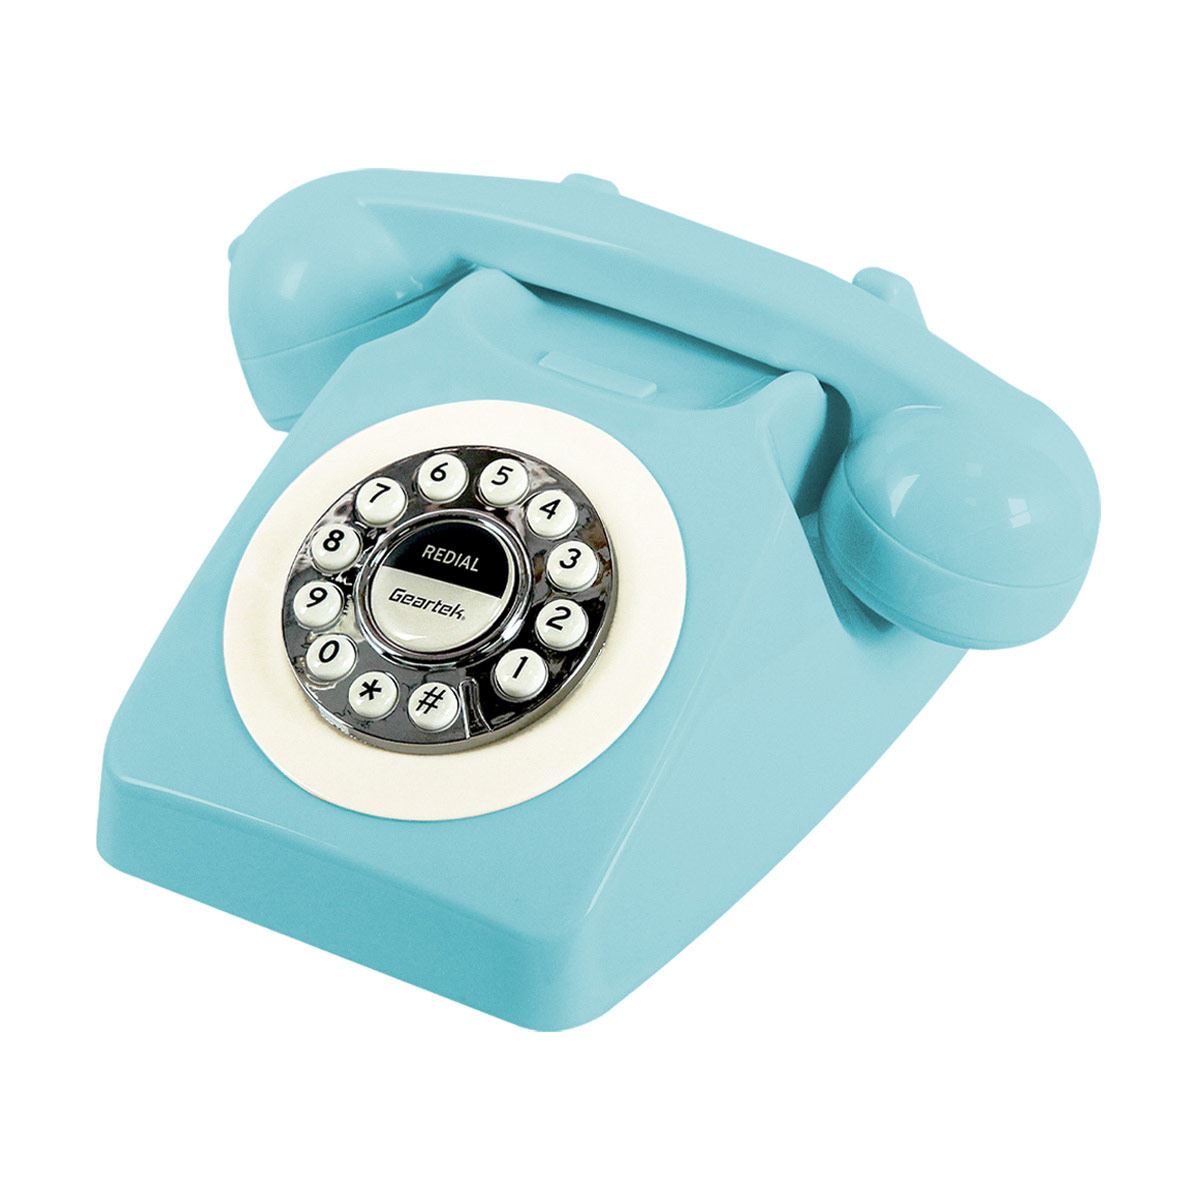 Accessoires con cable teléfono fijo teléfono antiguo con el botón